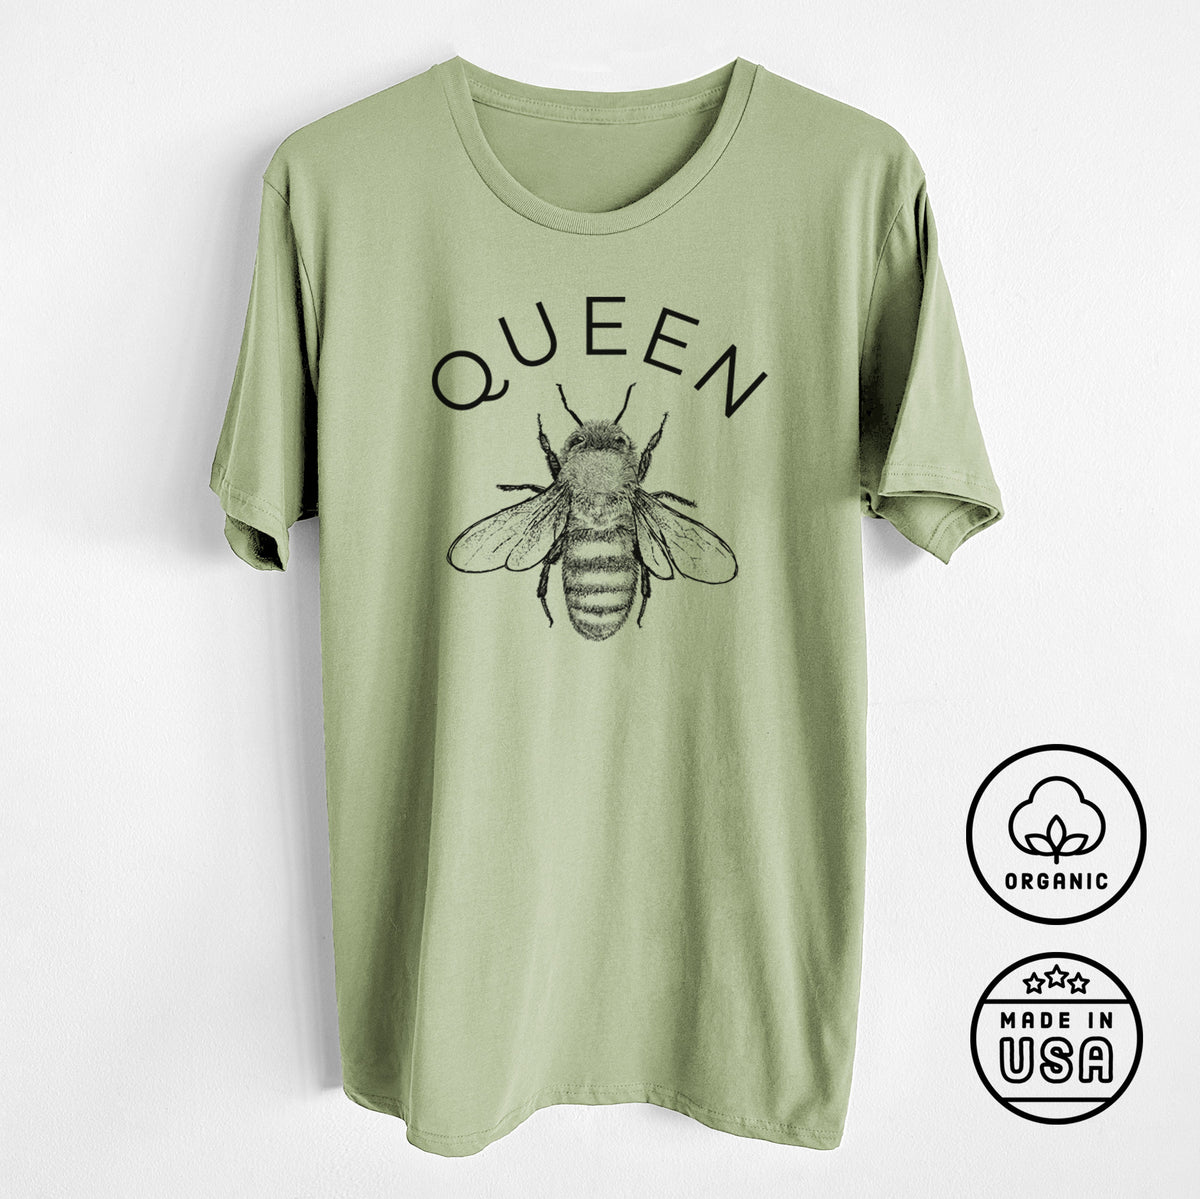 Queen Bee - Unisex Crewneck - Made in USA - 100% Organic Cotton